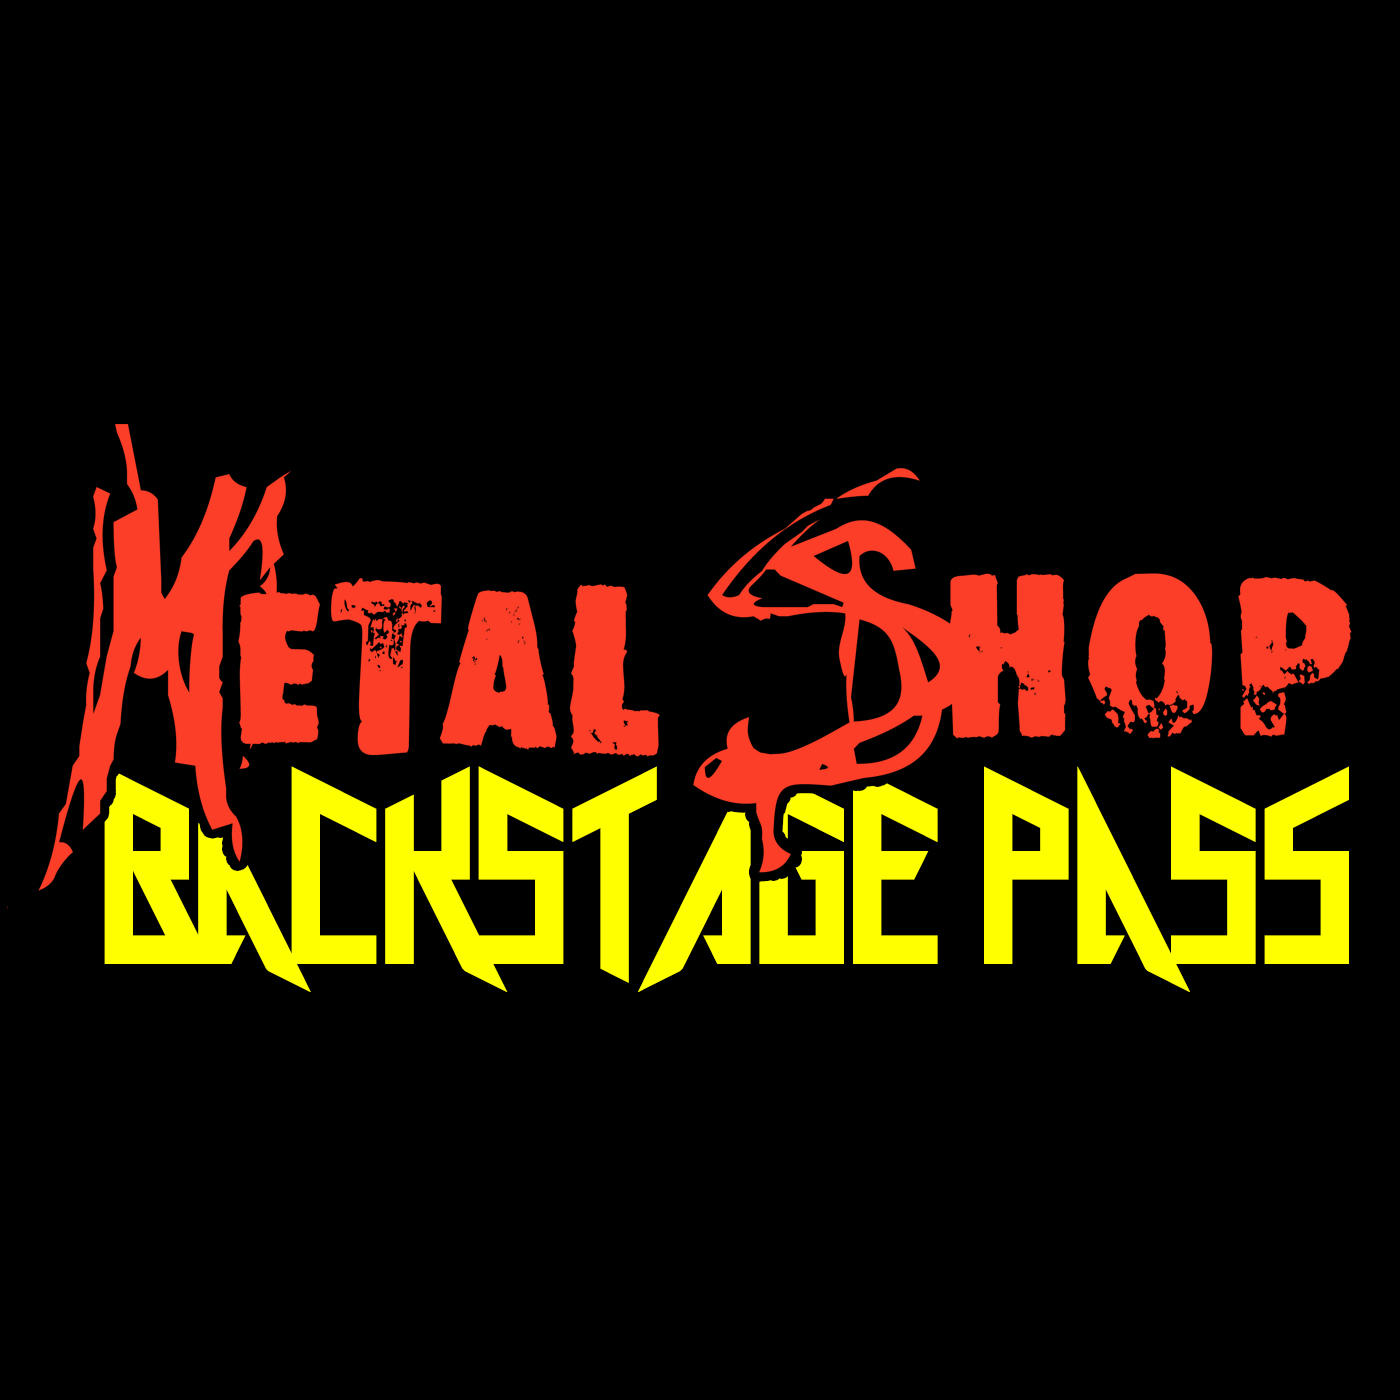 Metal Shop Interviews James Beach from NW Metal Fest 